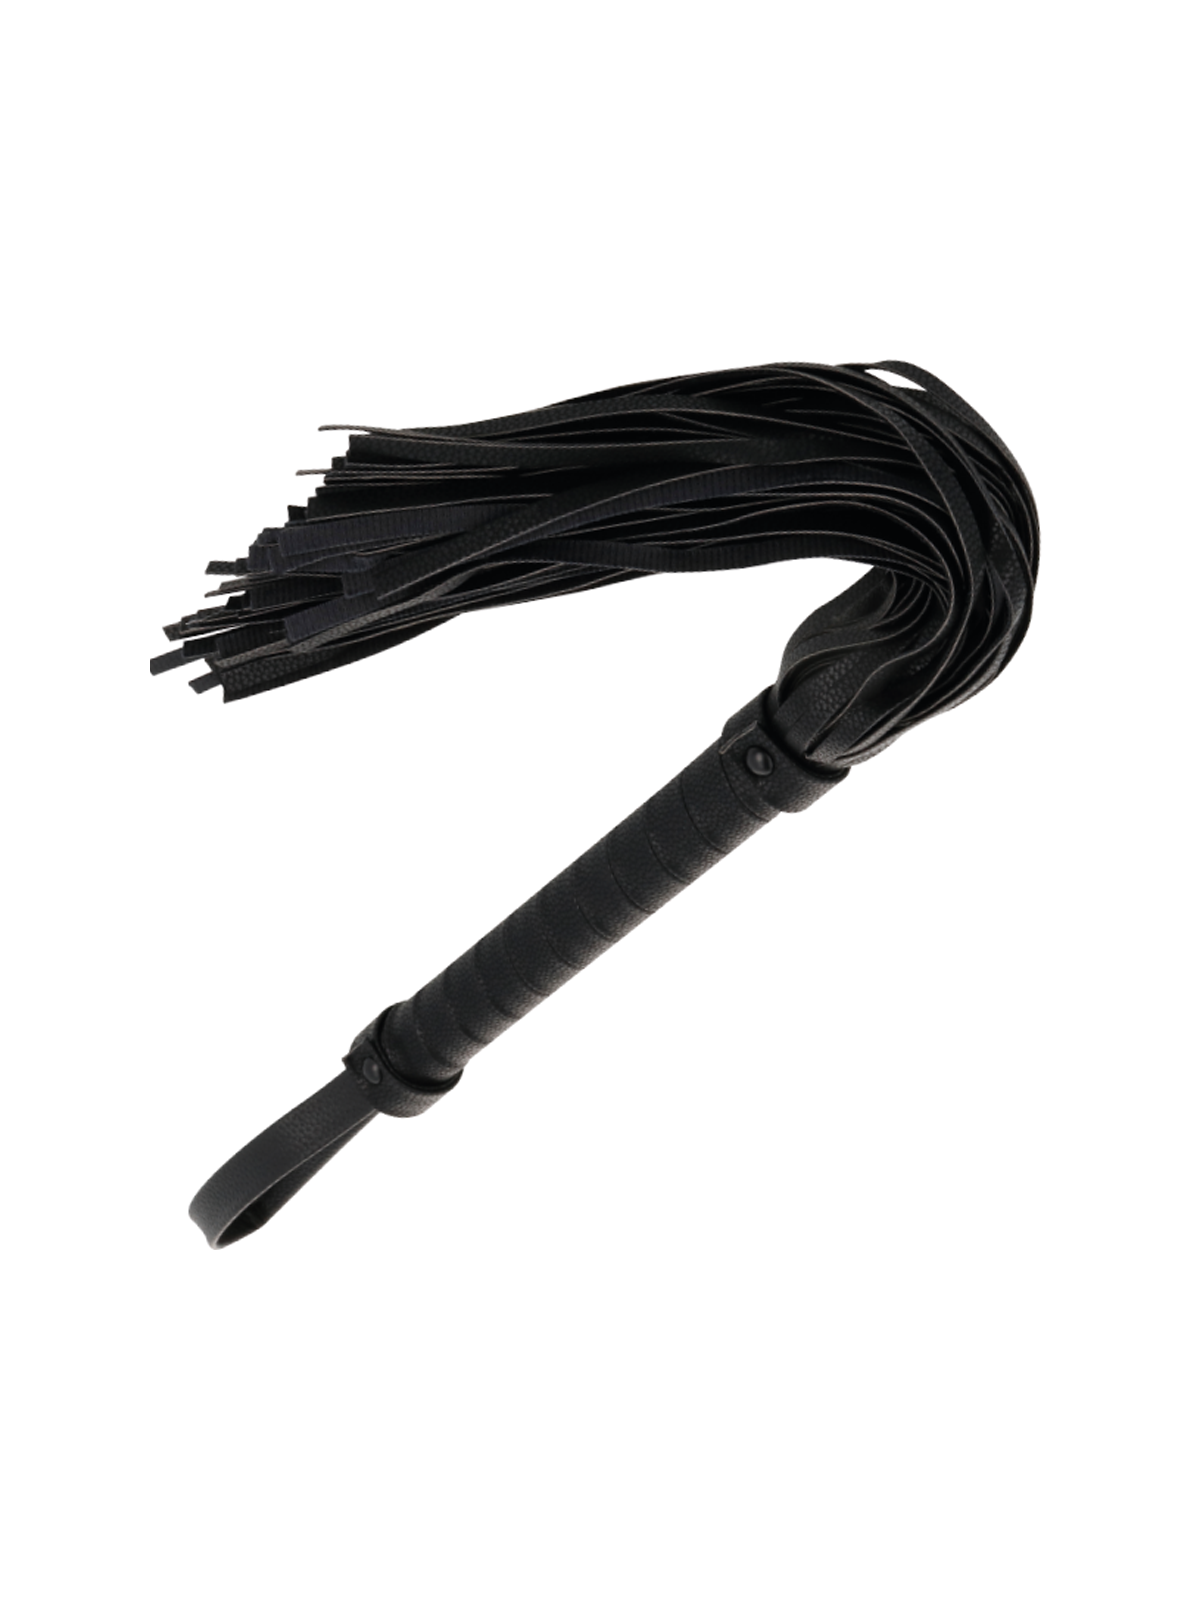 Darkness Látigo Bondage Negro 42 cm Leather - Comprar Látigo sexual Darkness - Látigos sexuales (1)